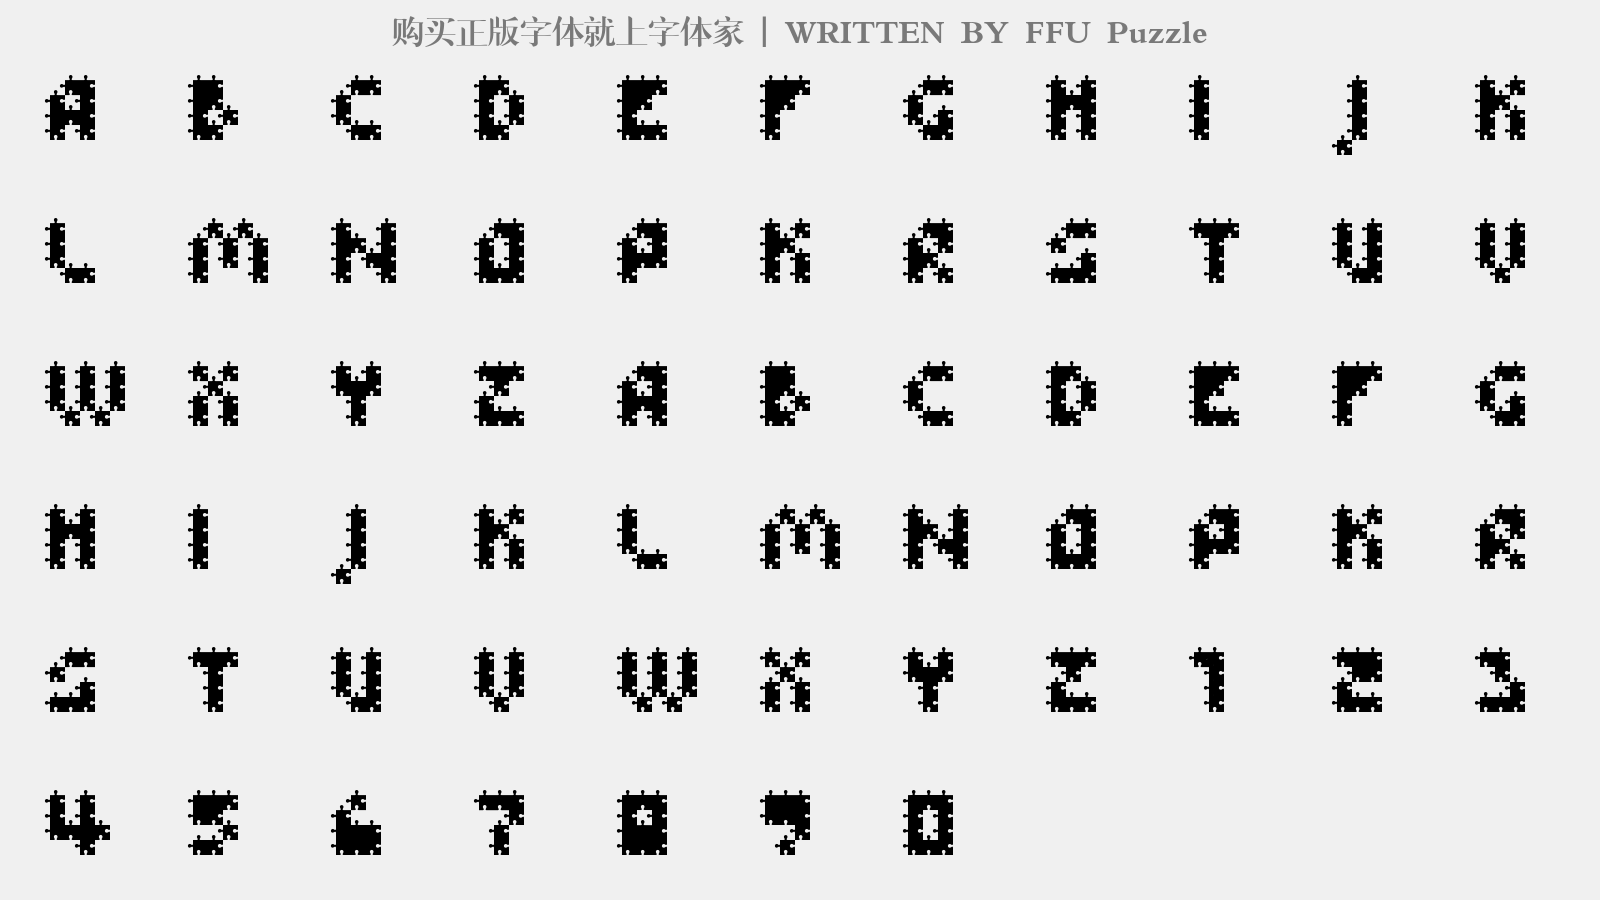 FFU Puzzle - 大写字母/小写字母/数字